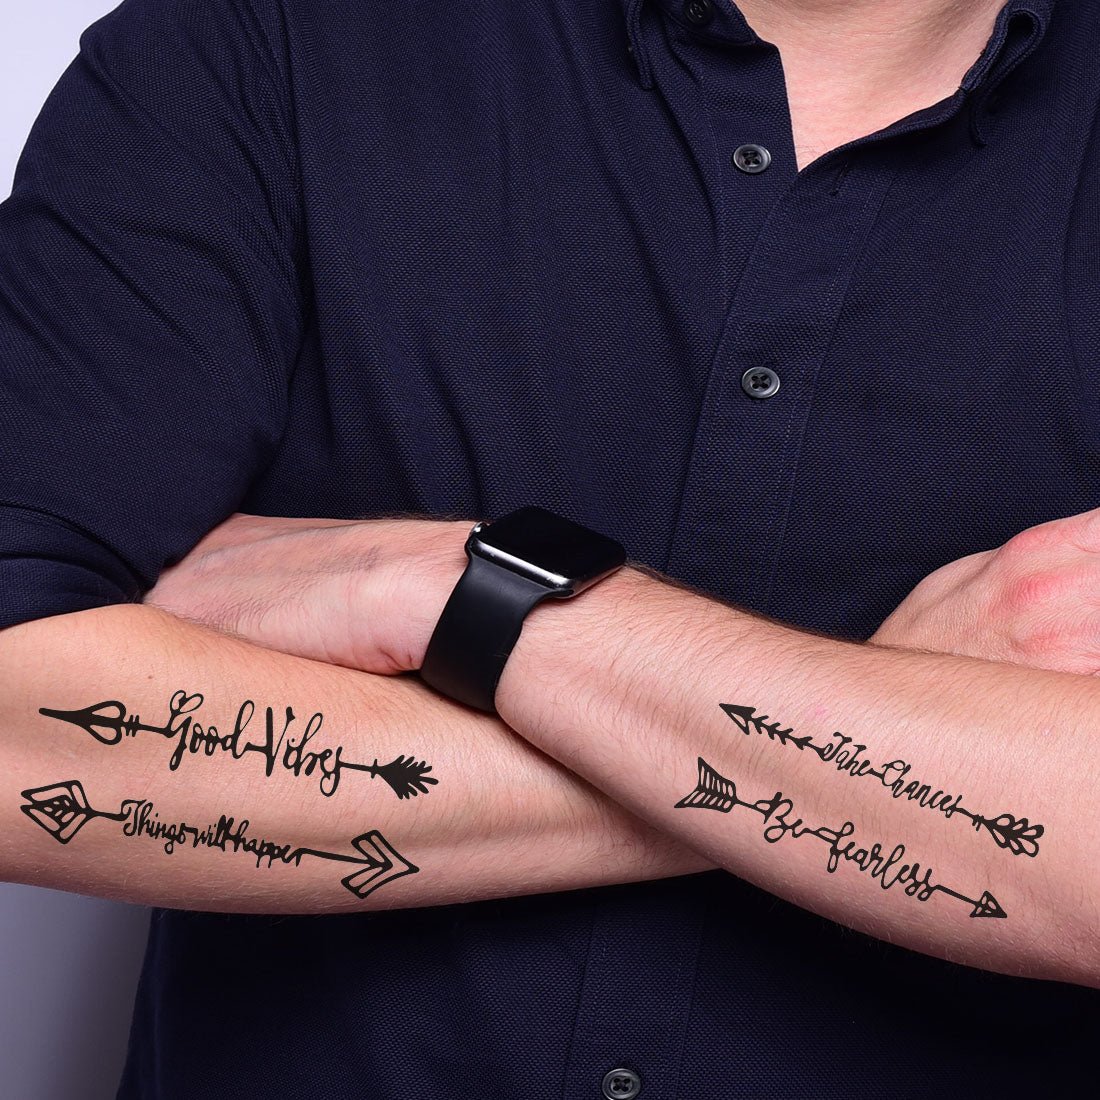 Minimalist Chevron Arrow Temporary Tattoo - Set of 3 – Little Tattoos